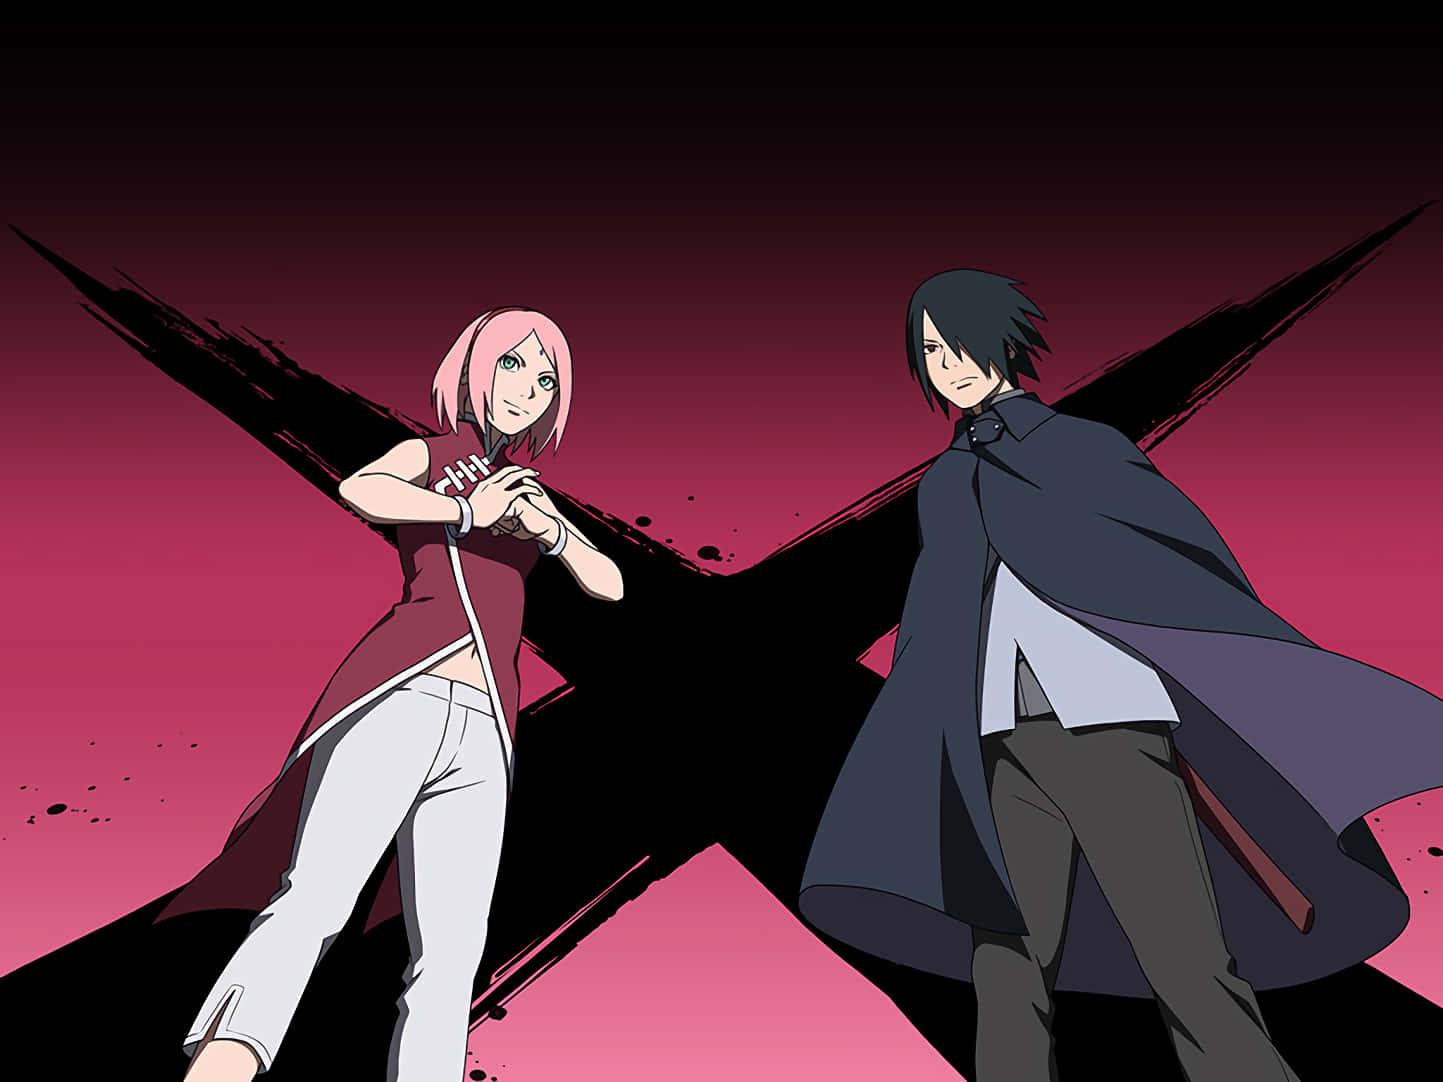 “Sasuke and Sakura - Two Powerhouses of the Ninja World” Wallpaper